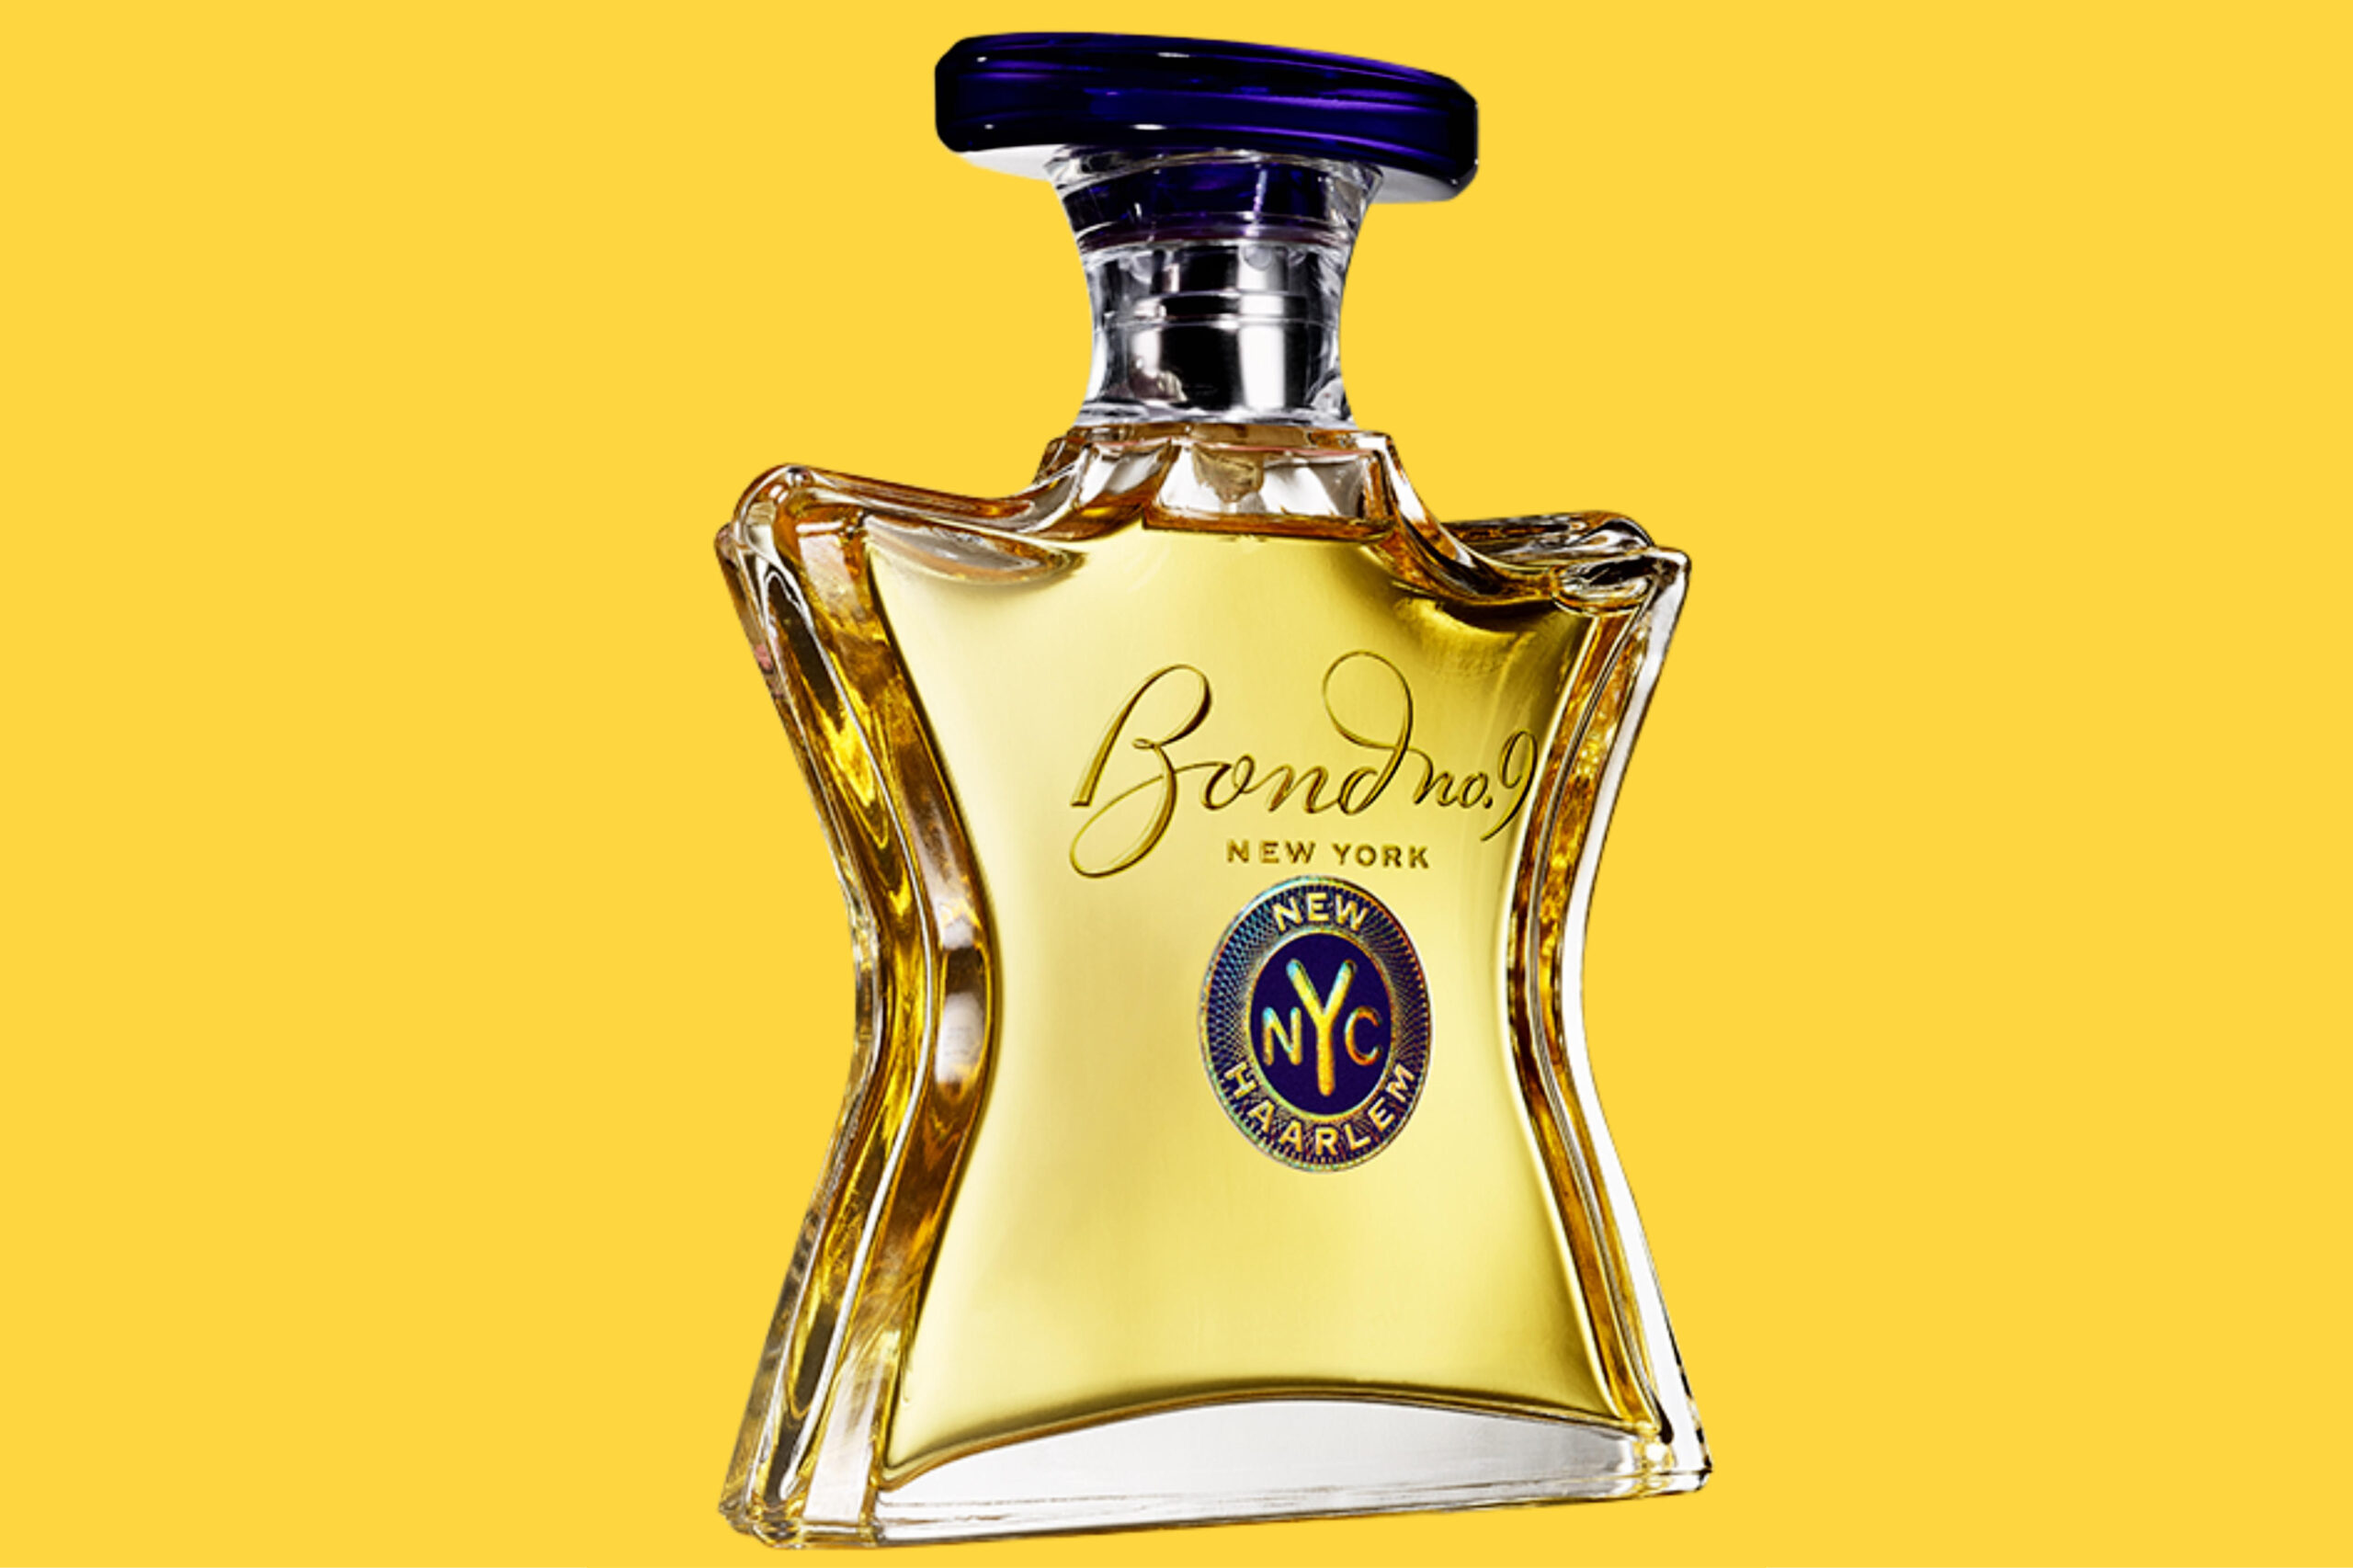 Bond No.9 drops its latest fragrance “New Harlem”